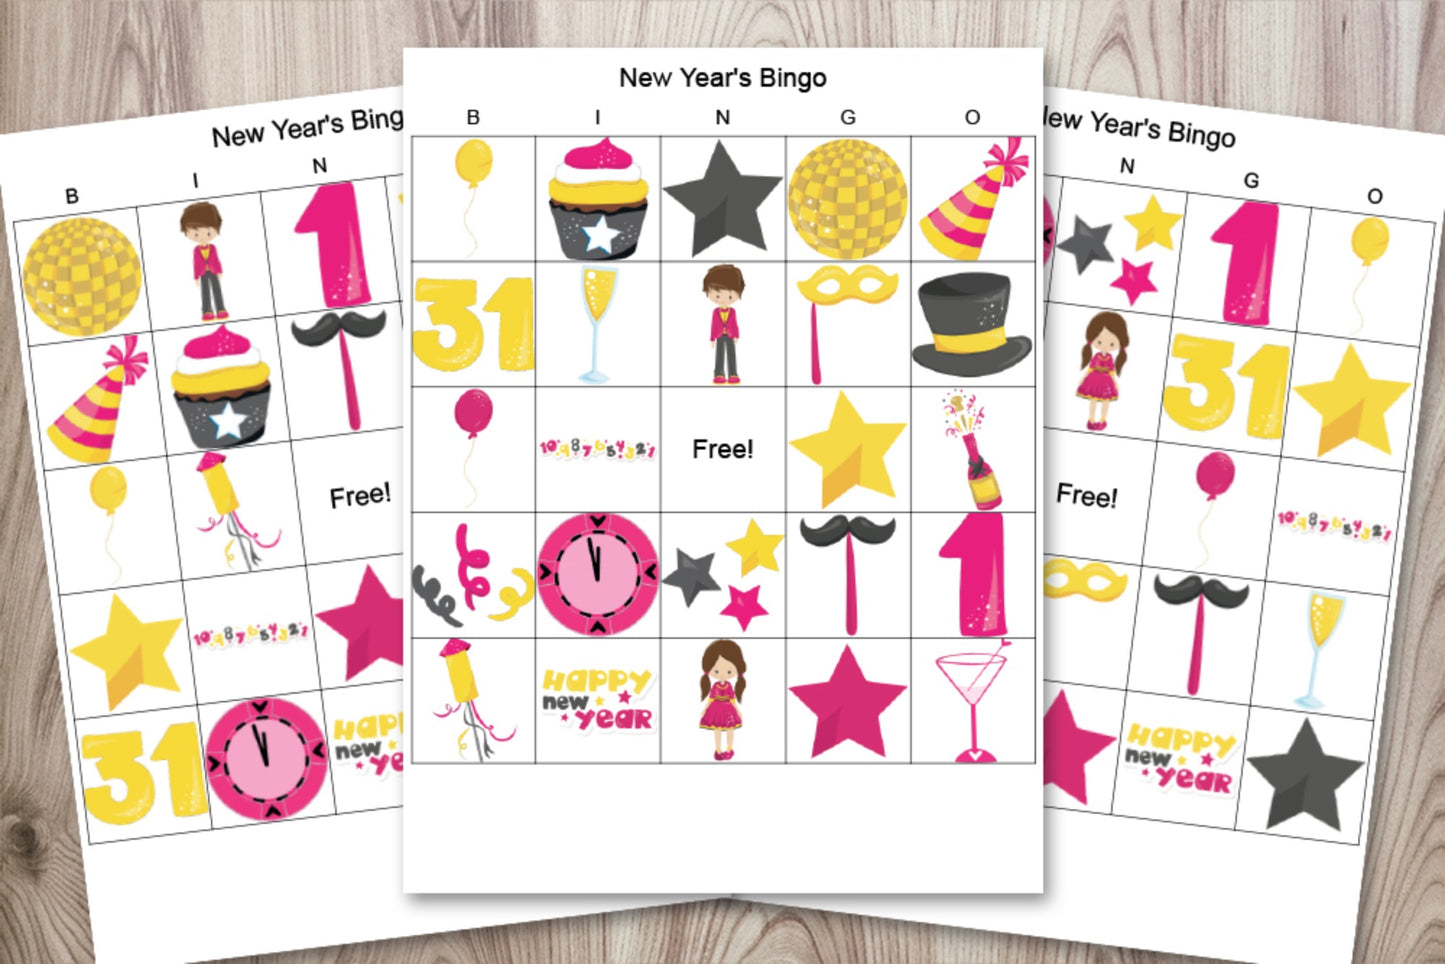 20 New Year's bingo cards